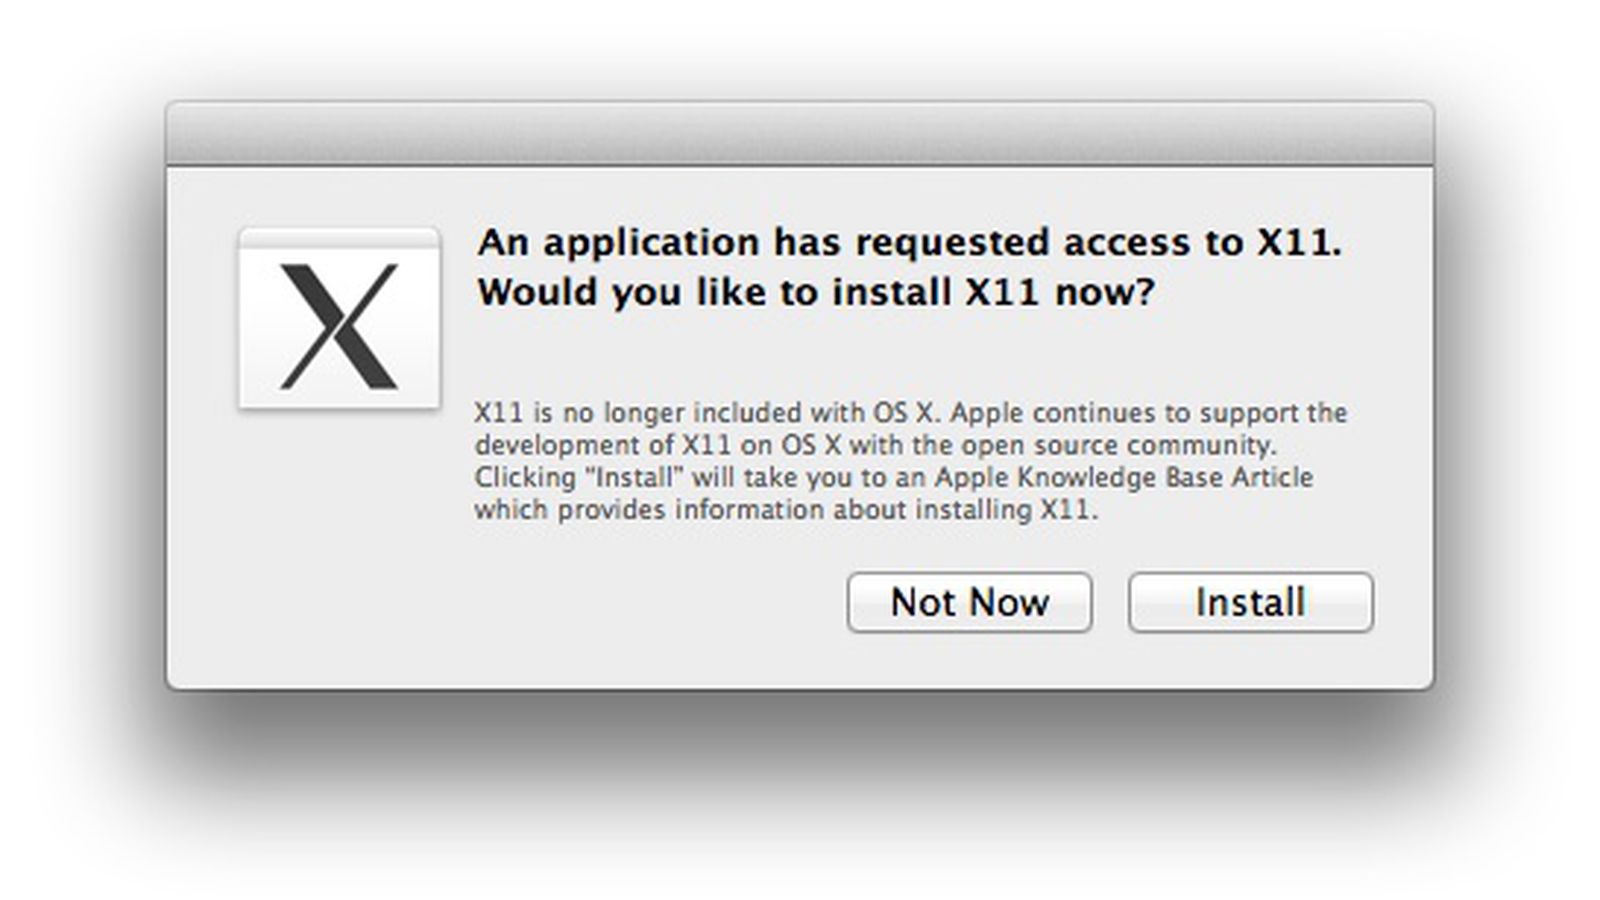 install xquartz on mac